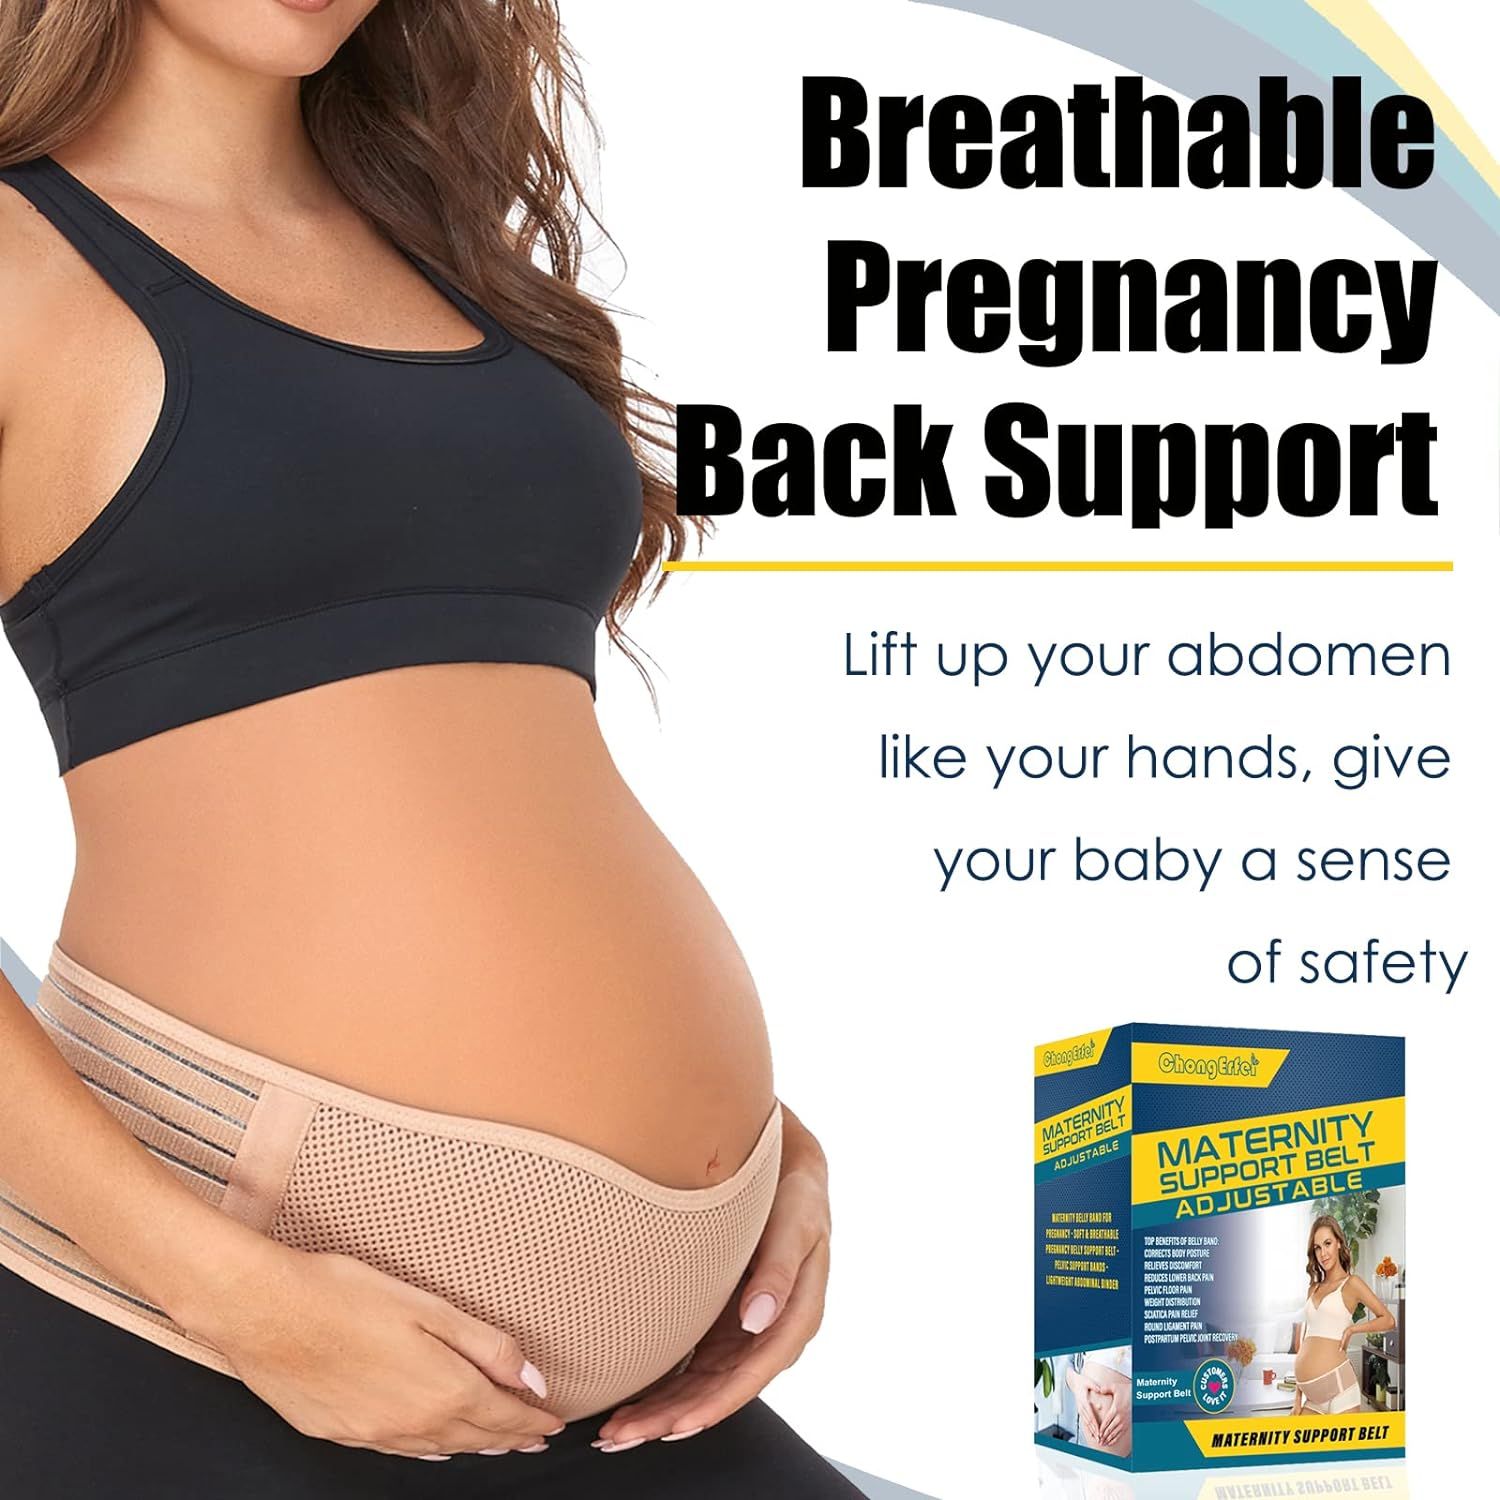 Pregnancy Belly Support Band Maternity Belt Belly Band for Pregnancy  Adjustable Maternity Support Belt for Abdomen, Pelvic, Waist, & Back Pain  (One